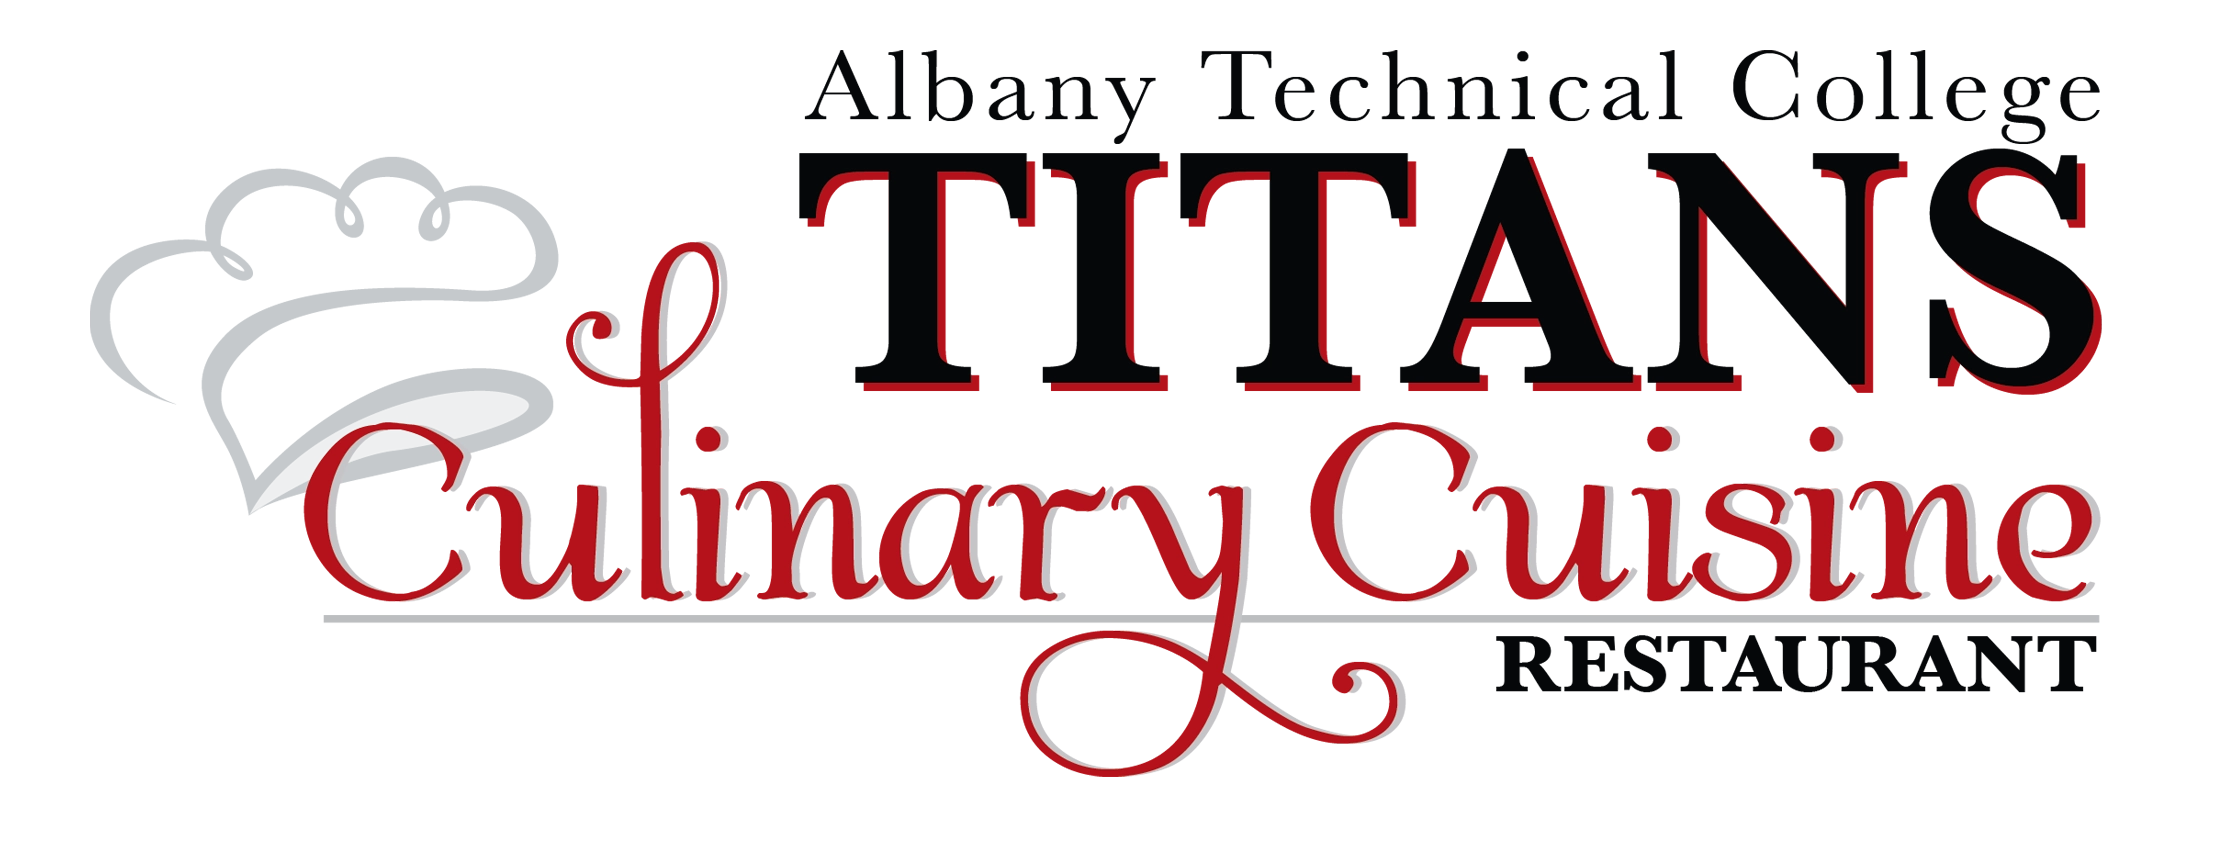 Albany Technical College Titans Culinary Cuisine Restaurant Logo.